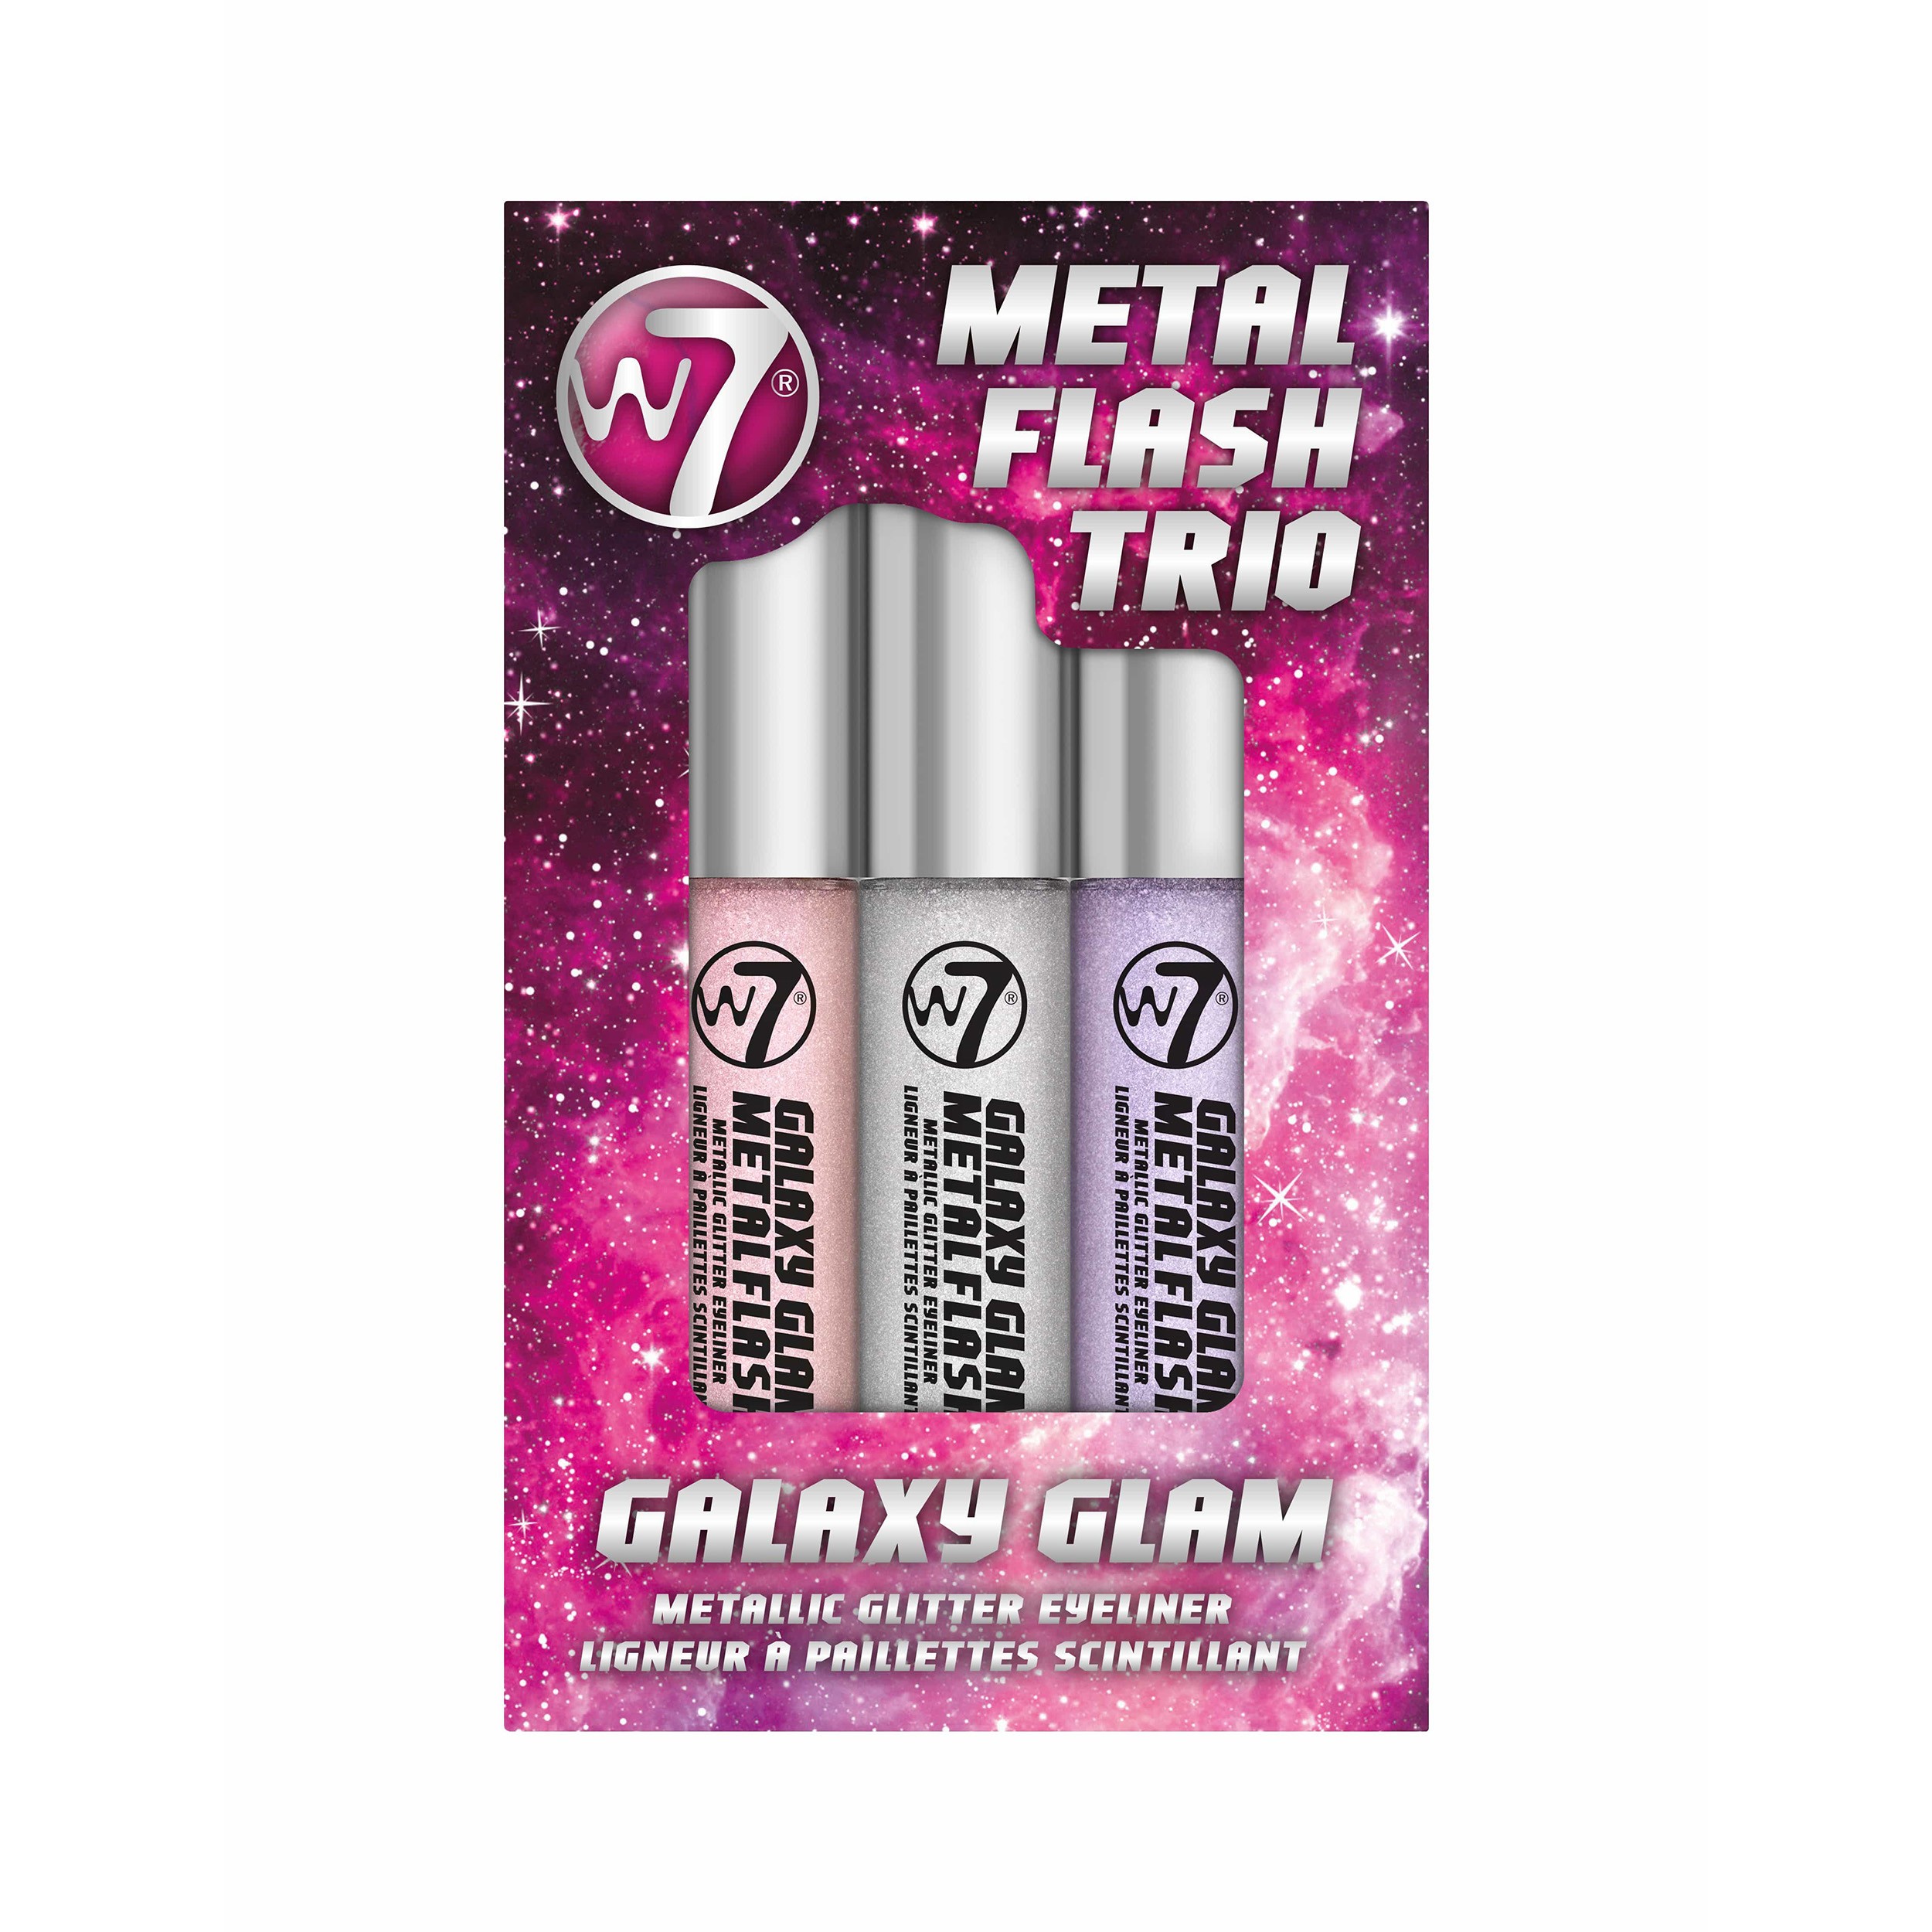 Eye-Liner Liquid - Metal Flash Trio - Galaxy Glam